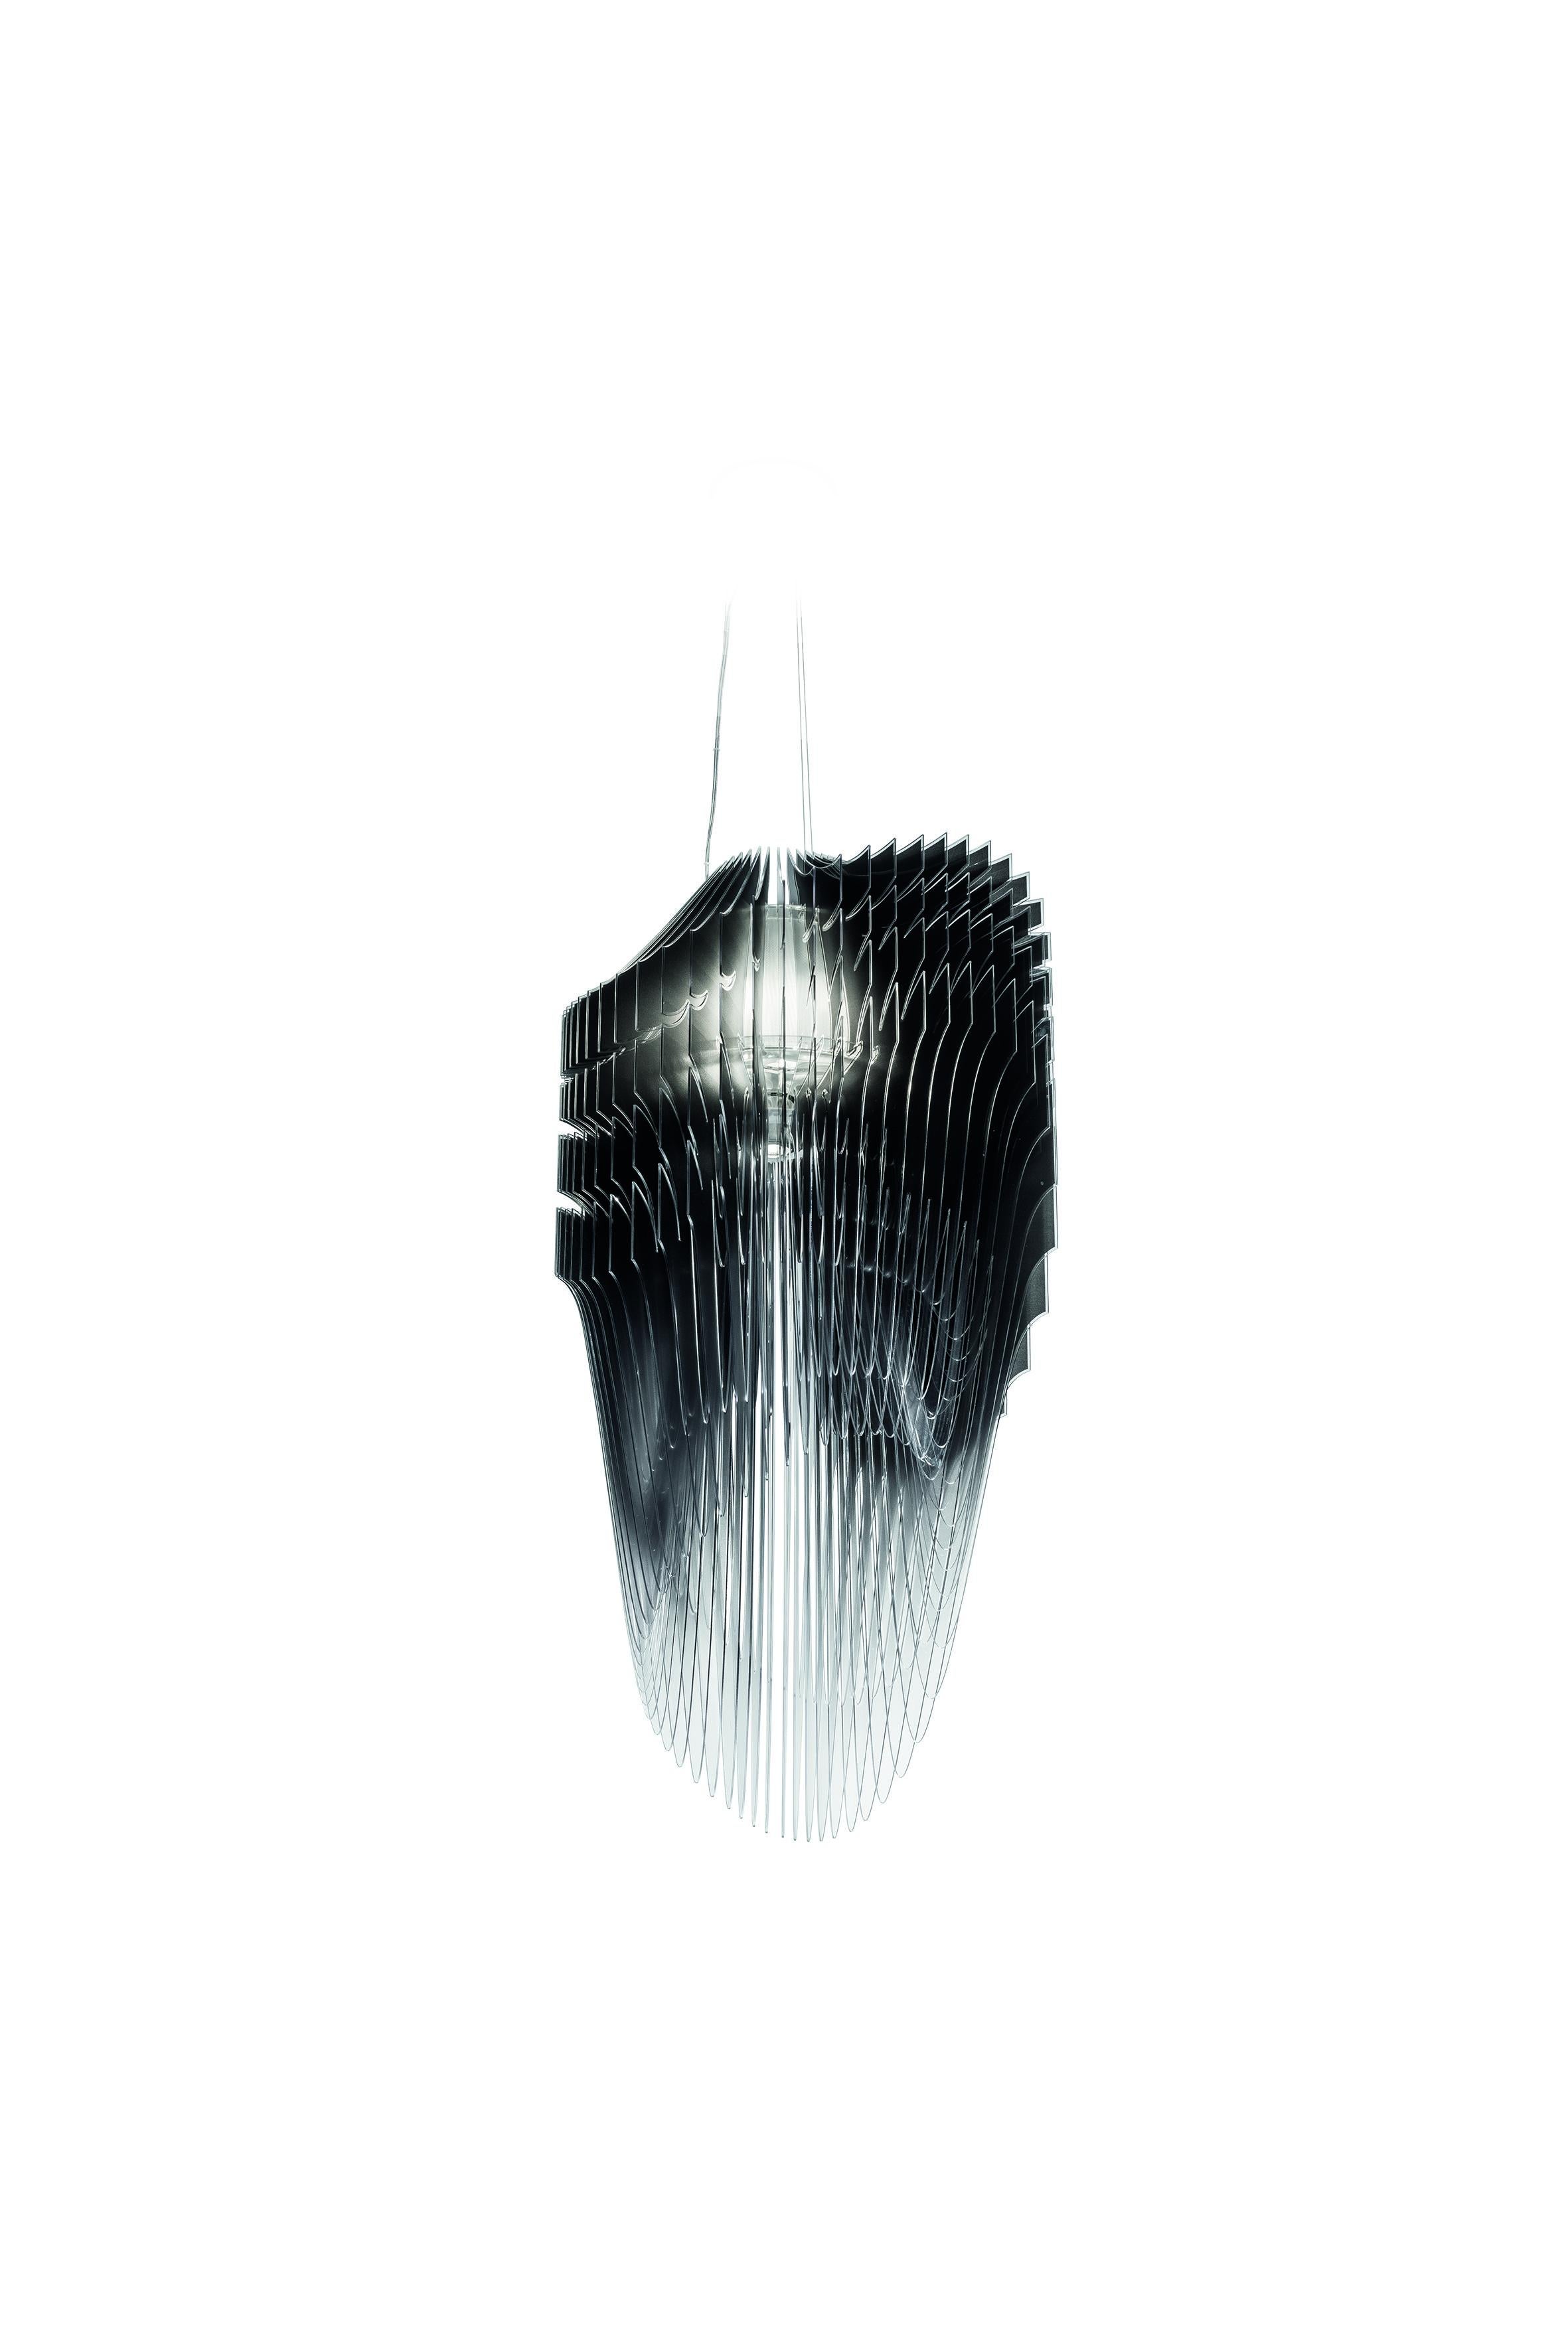 SLAMP Avia Medium Pendant Light in Black by Zaha Hadid